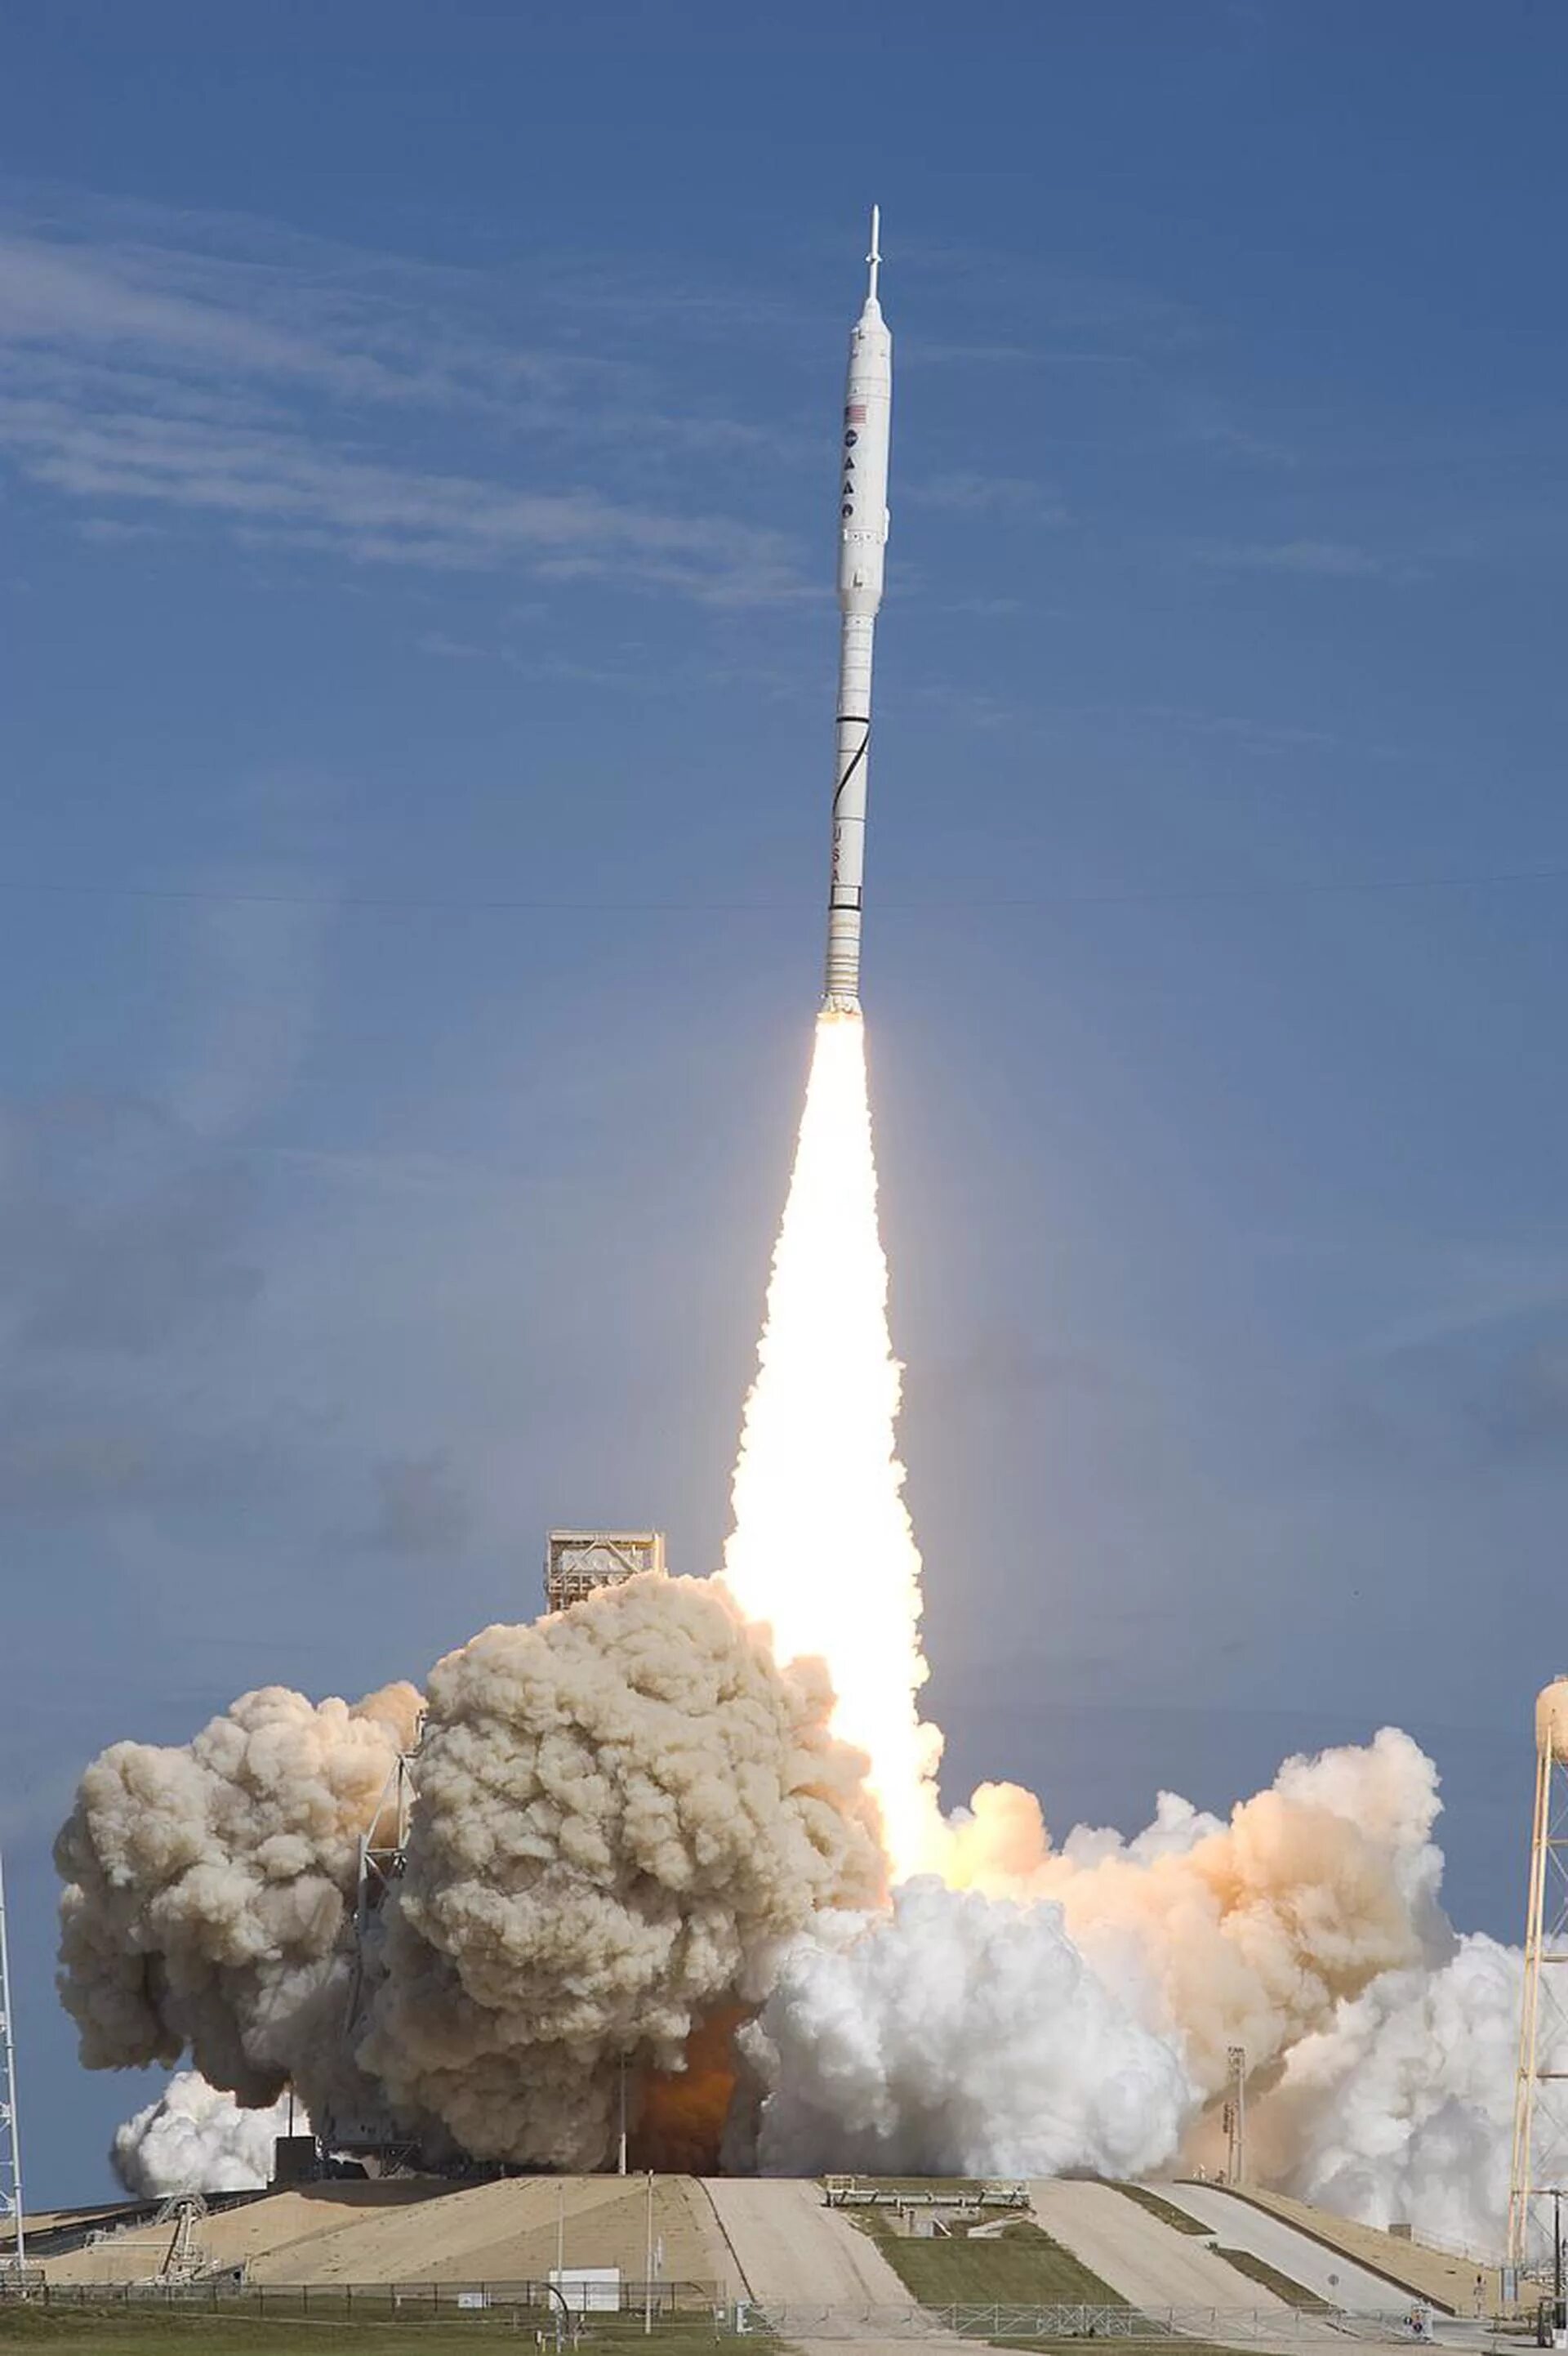 Ares 1 16. Арес 1 ракета. Мыс Канаверал запуск ракеты. Ракета старт. Ракета с запуском.